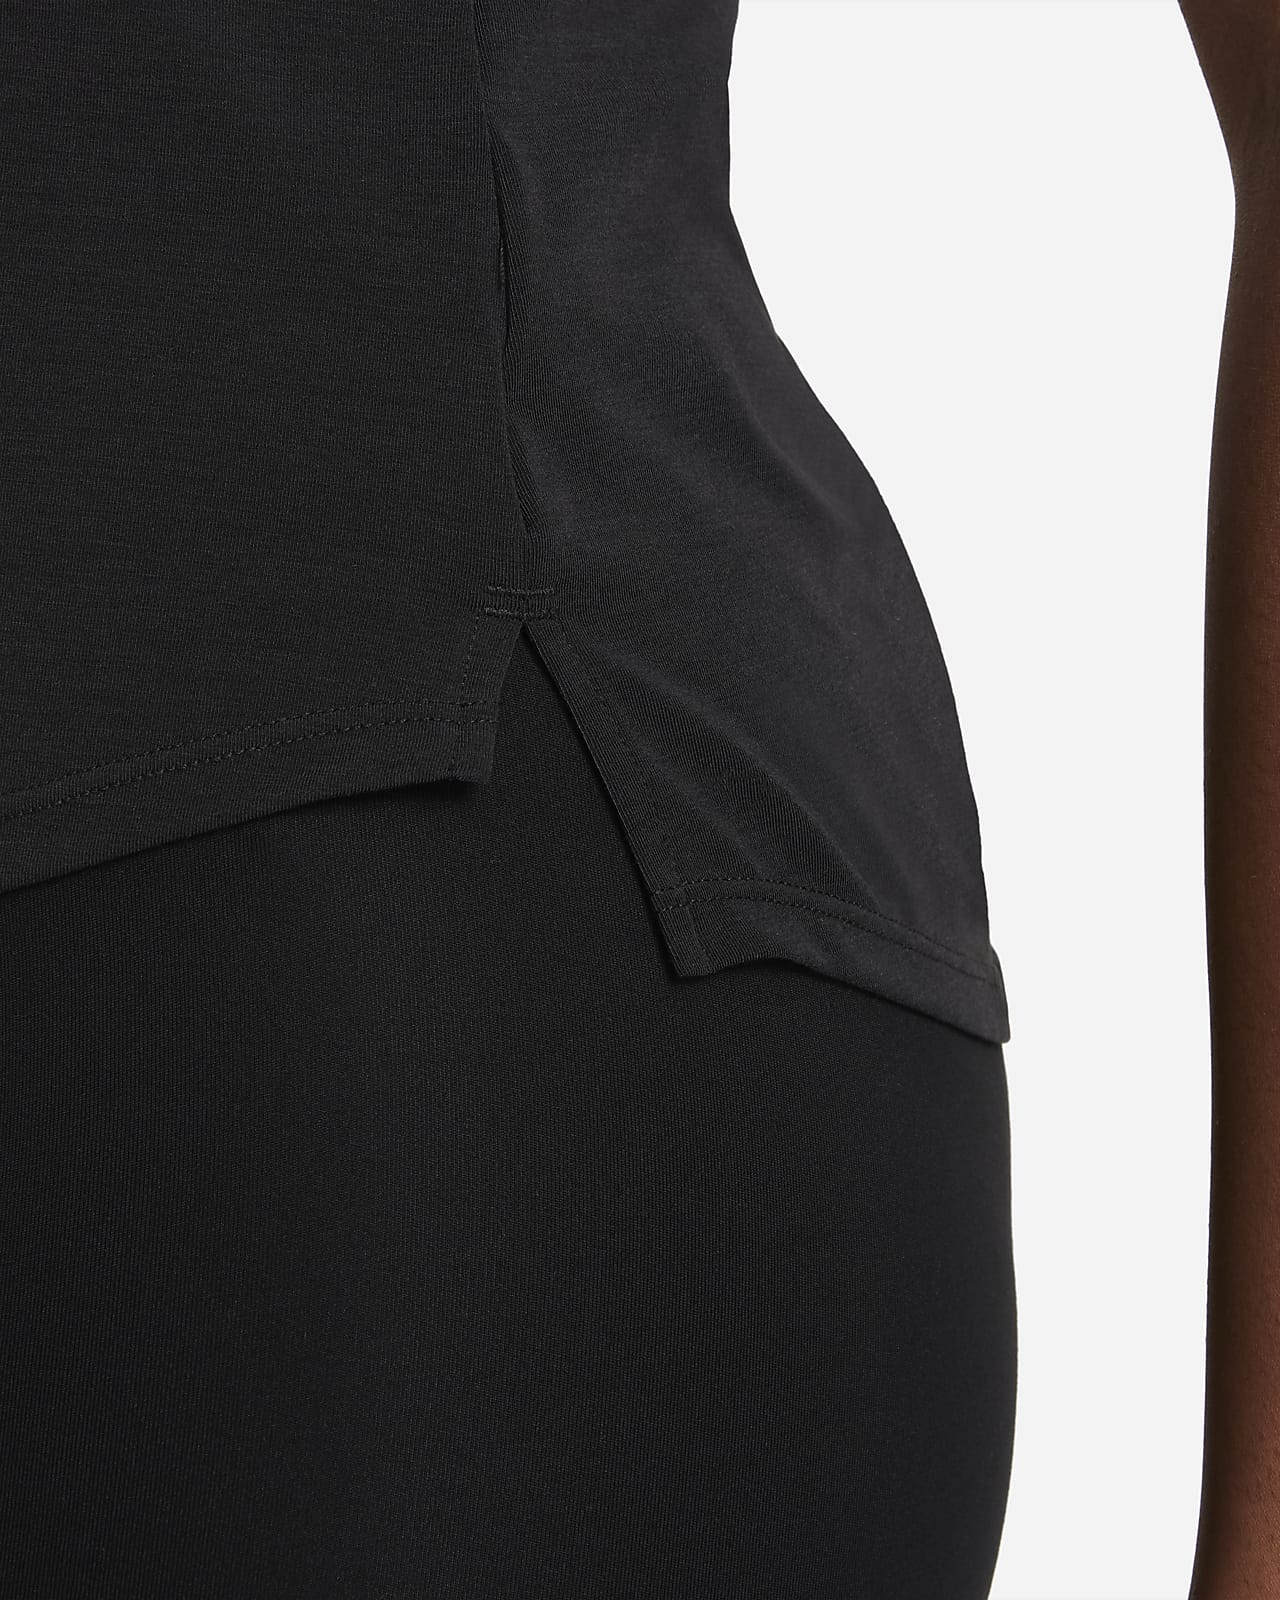 Nike Dri-FIT UV One Luxe Women's Standard Fit Short-Sleeve Top.